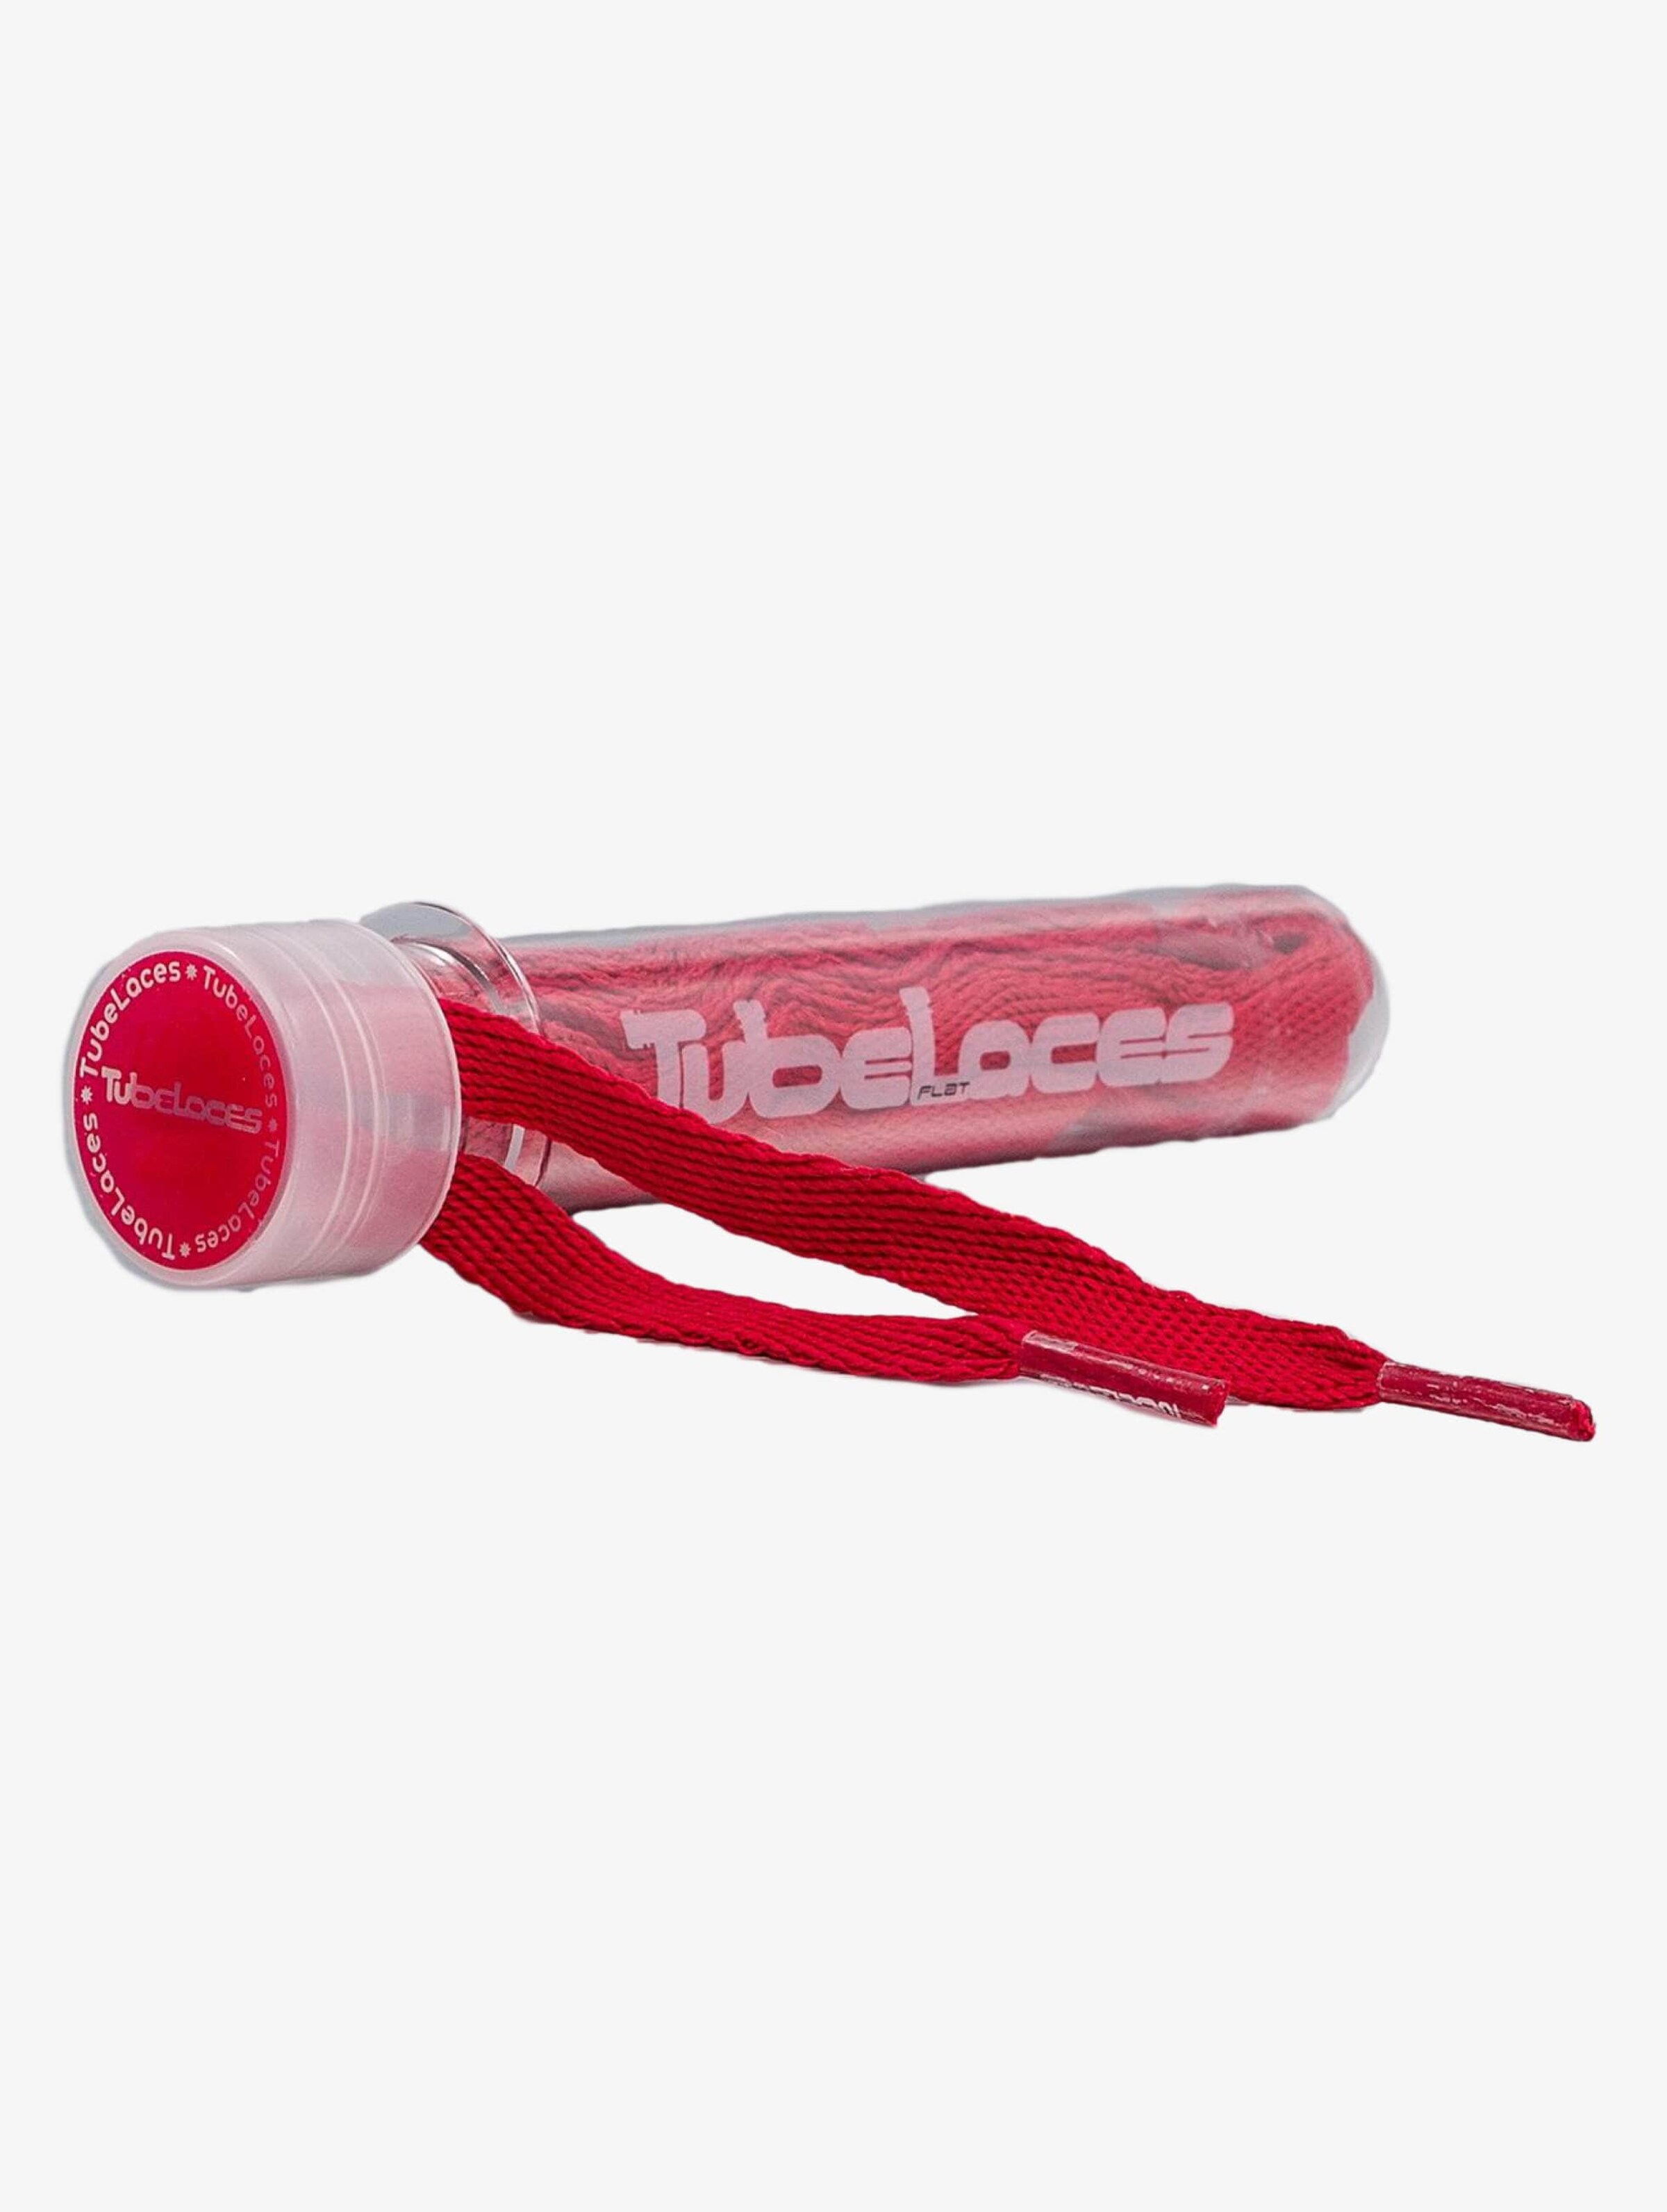 Tubelaces Flat Laces 140cm Schnürsenkel Unisex op kleur rood, Maat 140CM